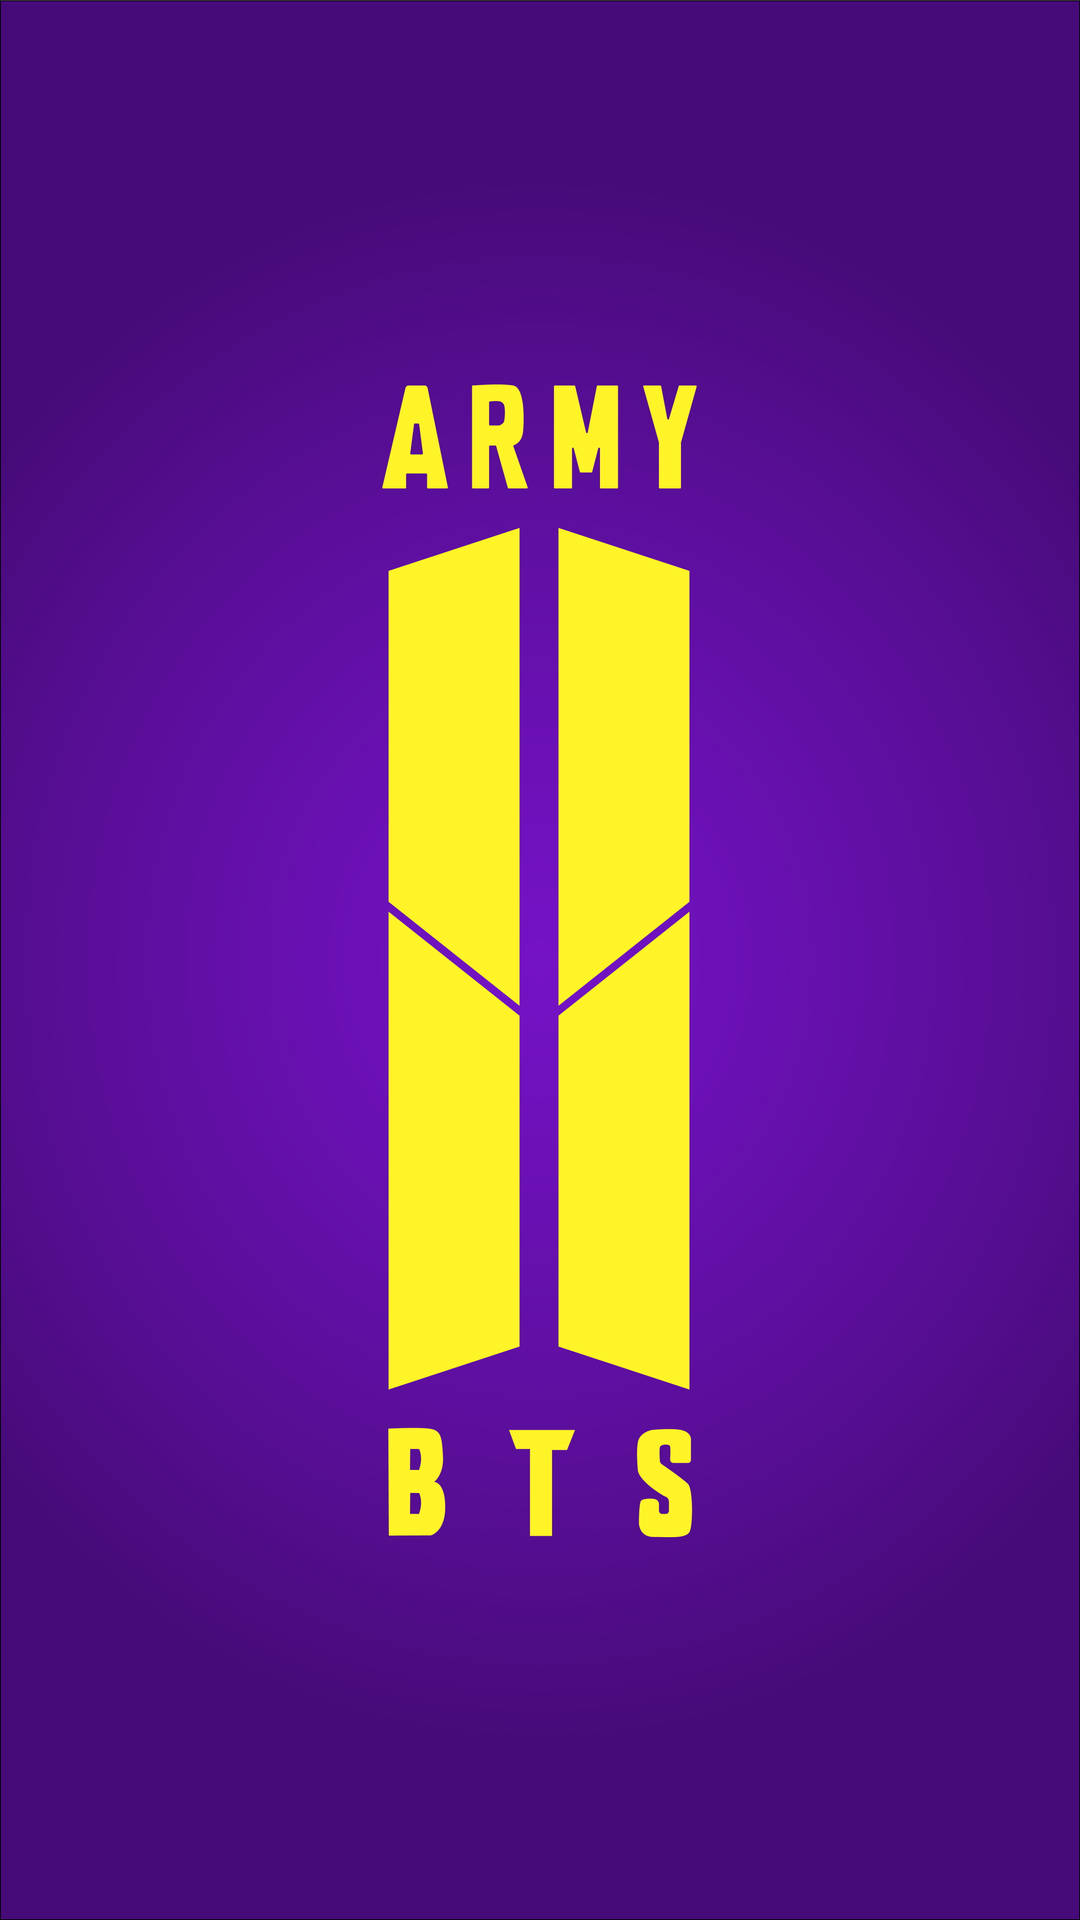 Yellow Bts Army Emblem